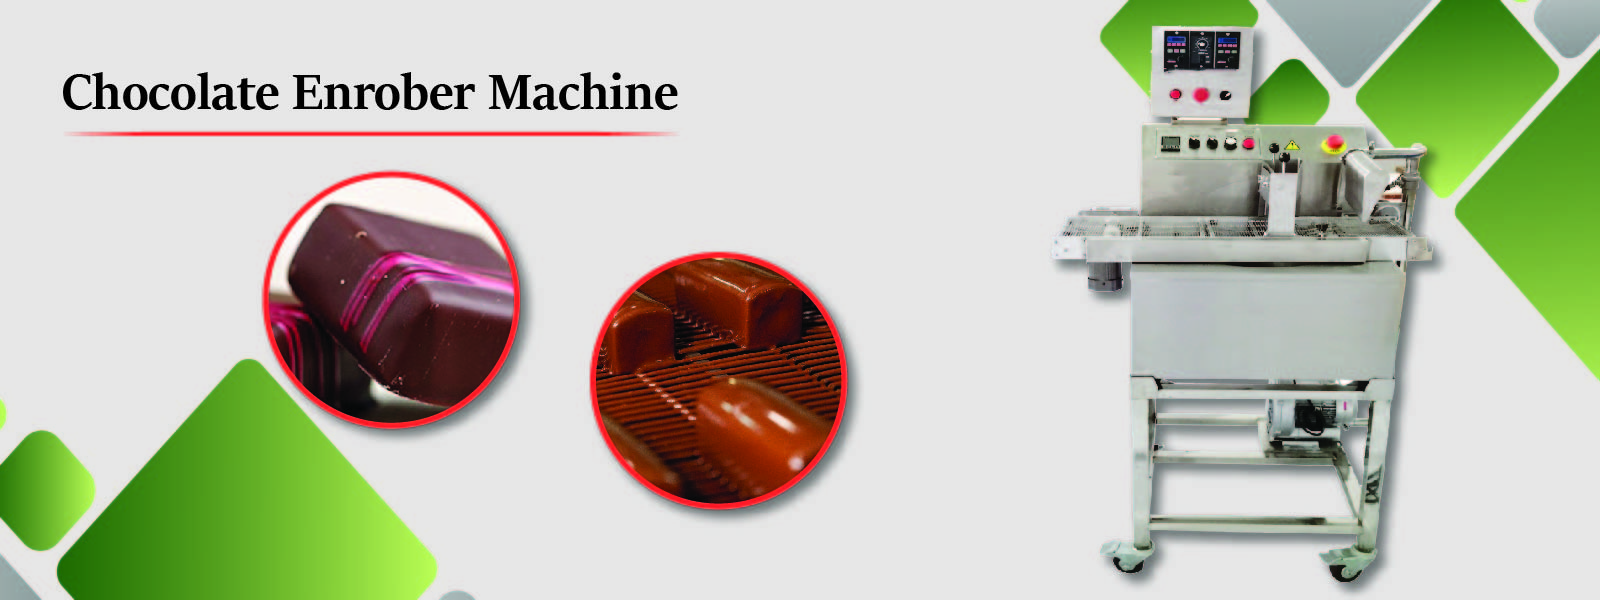 Product image Chocolate enrober machine